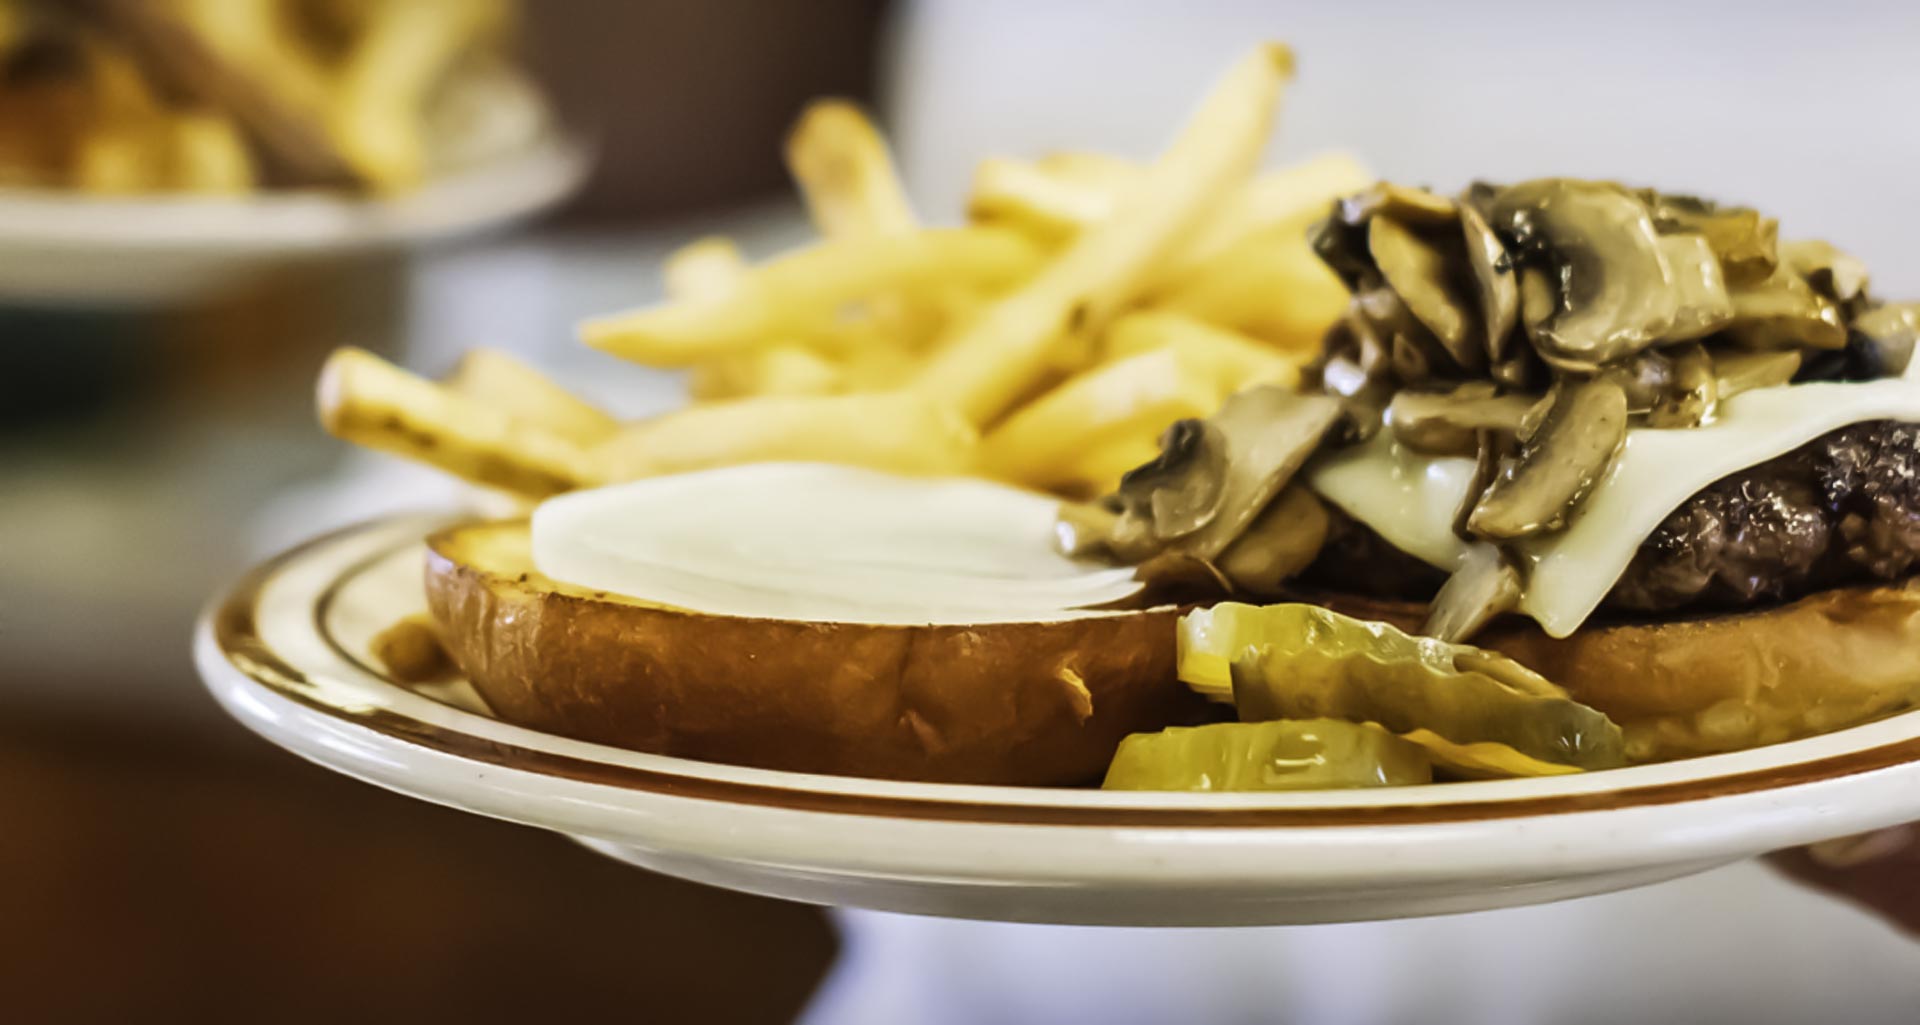 Mushroom and Swiss hamburger with fries.